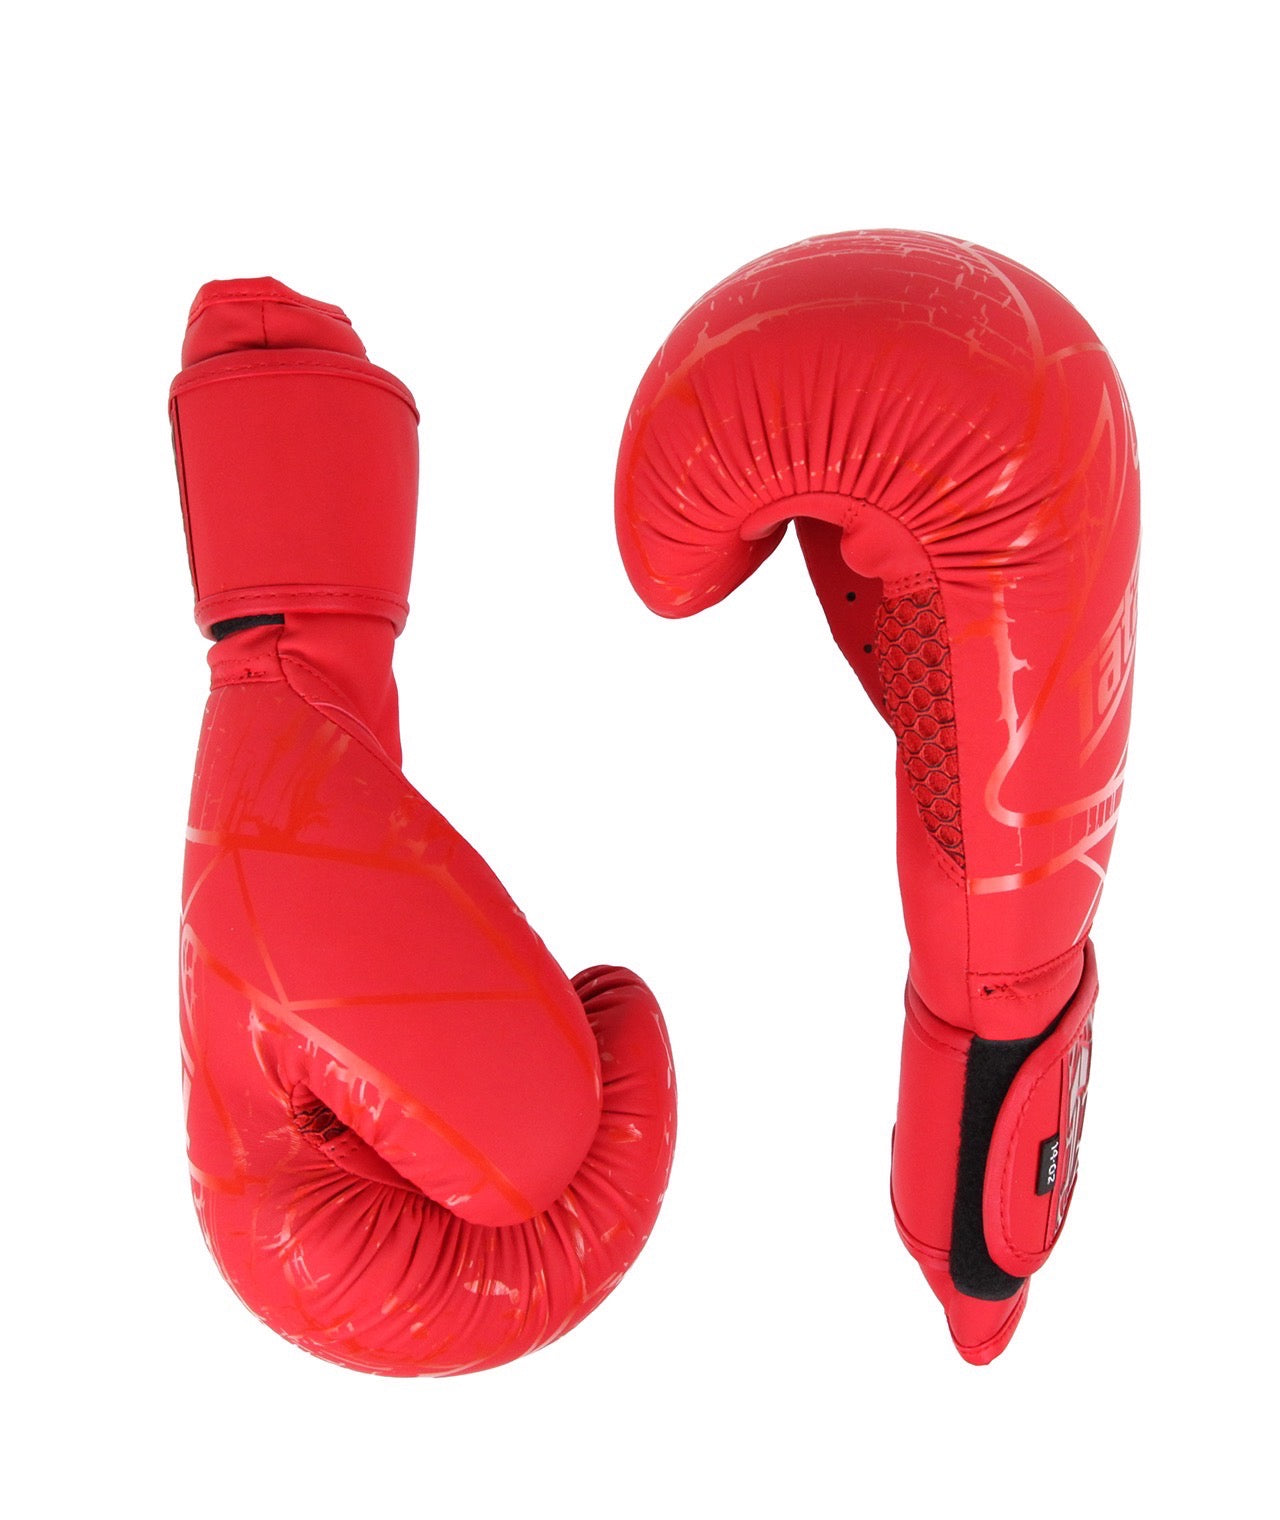 TATAMI Obsidian Boxing Gloves - Red